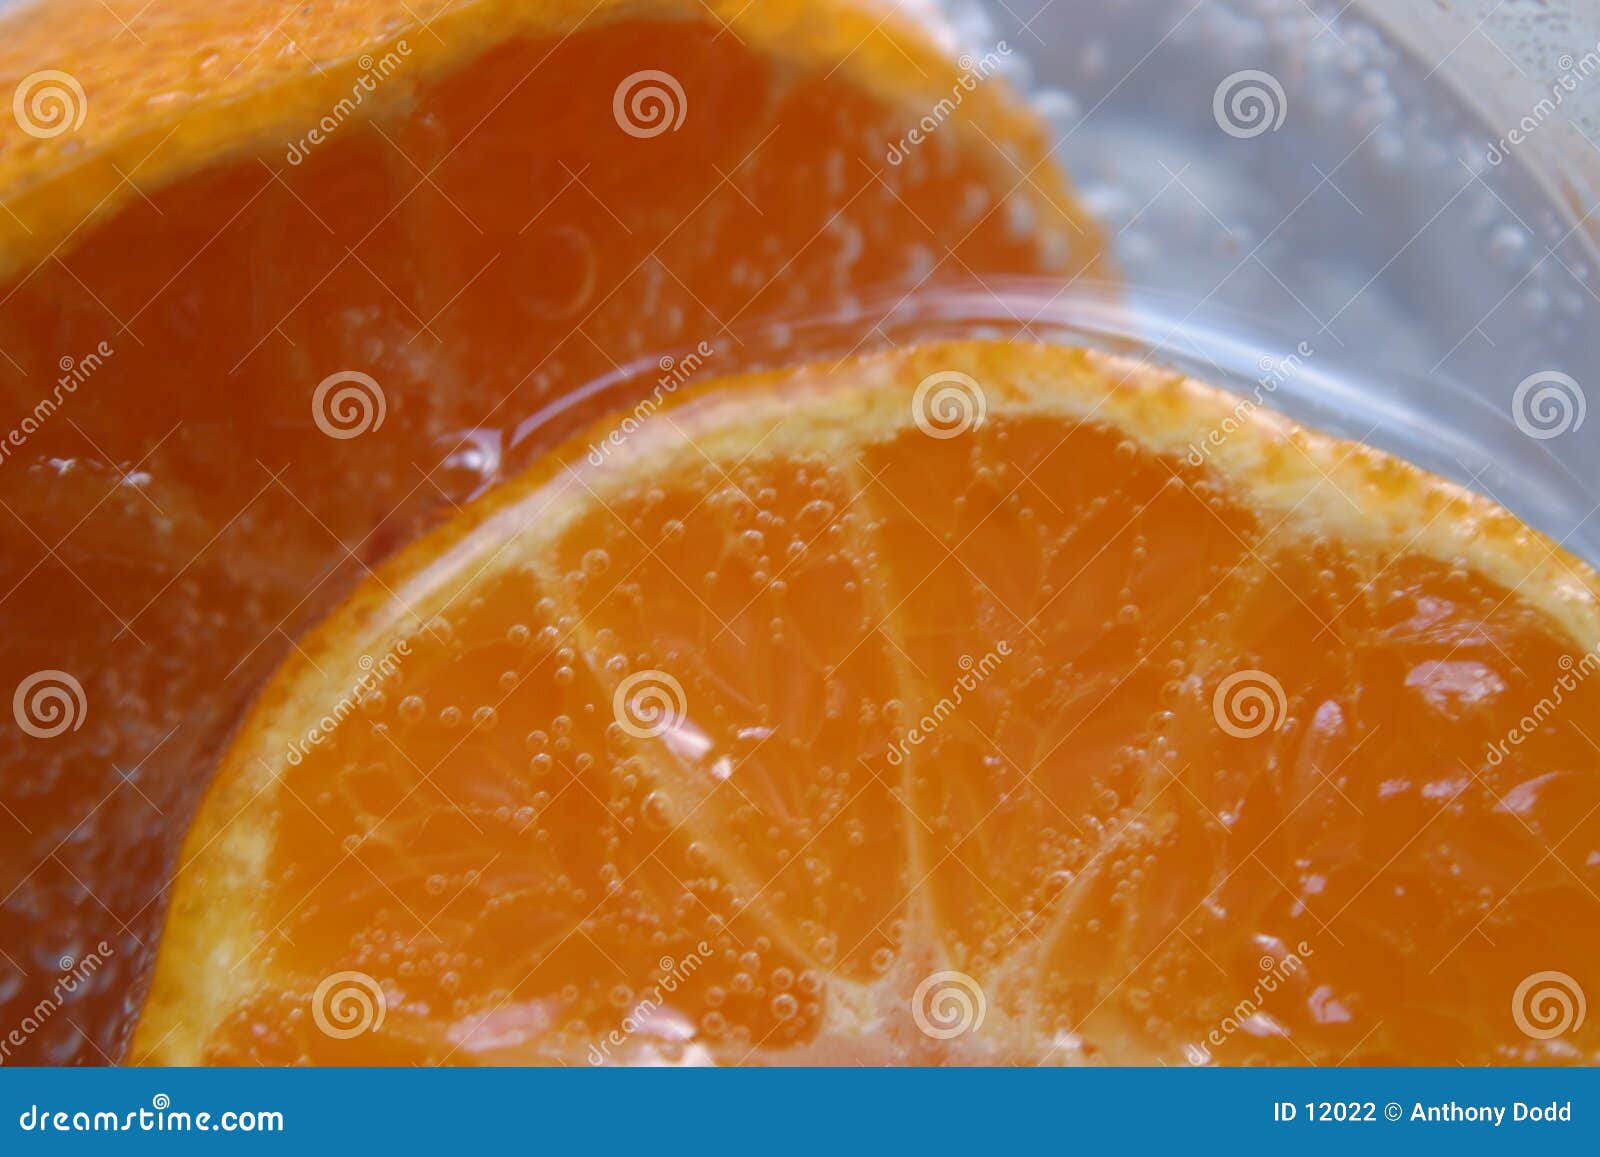 orange fiz